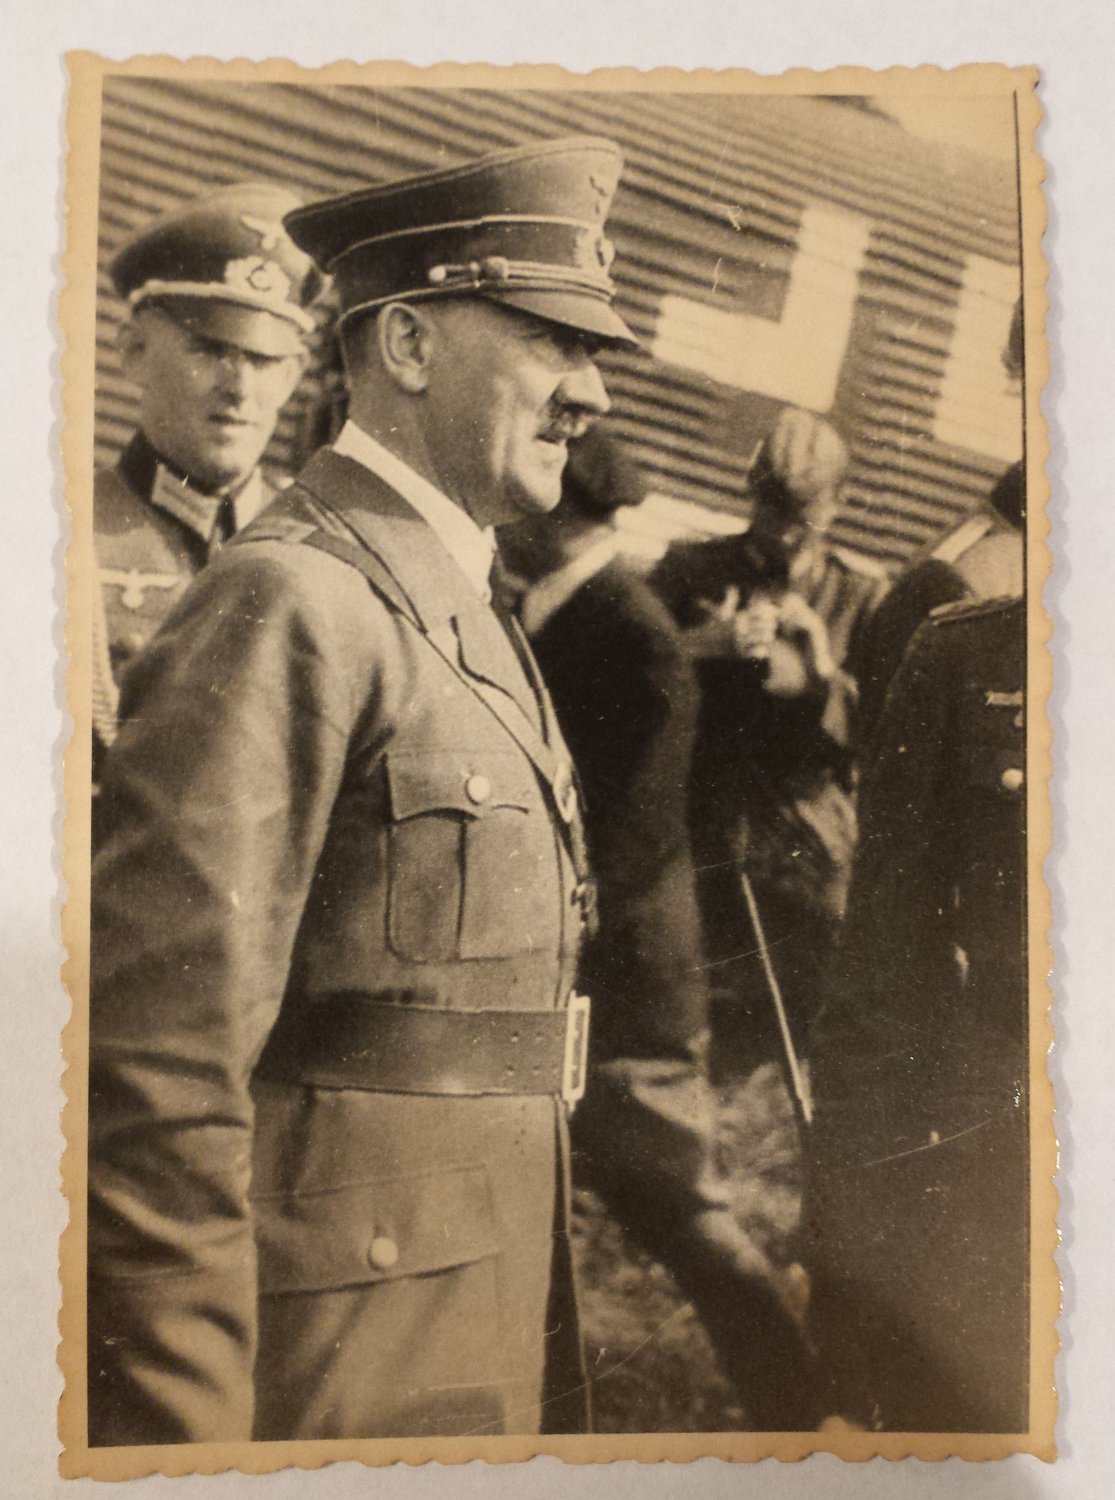 WWII GERMAN LEADER ADOLF HITLER PHOTO - ORIGINAL